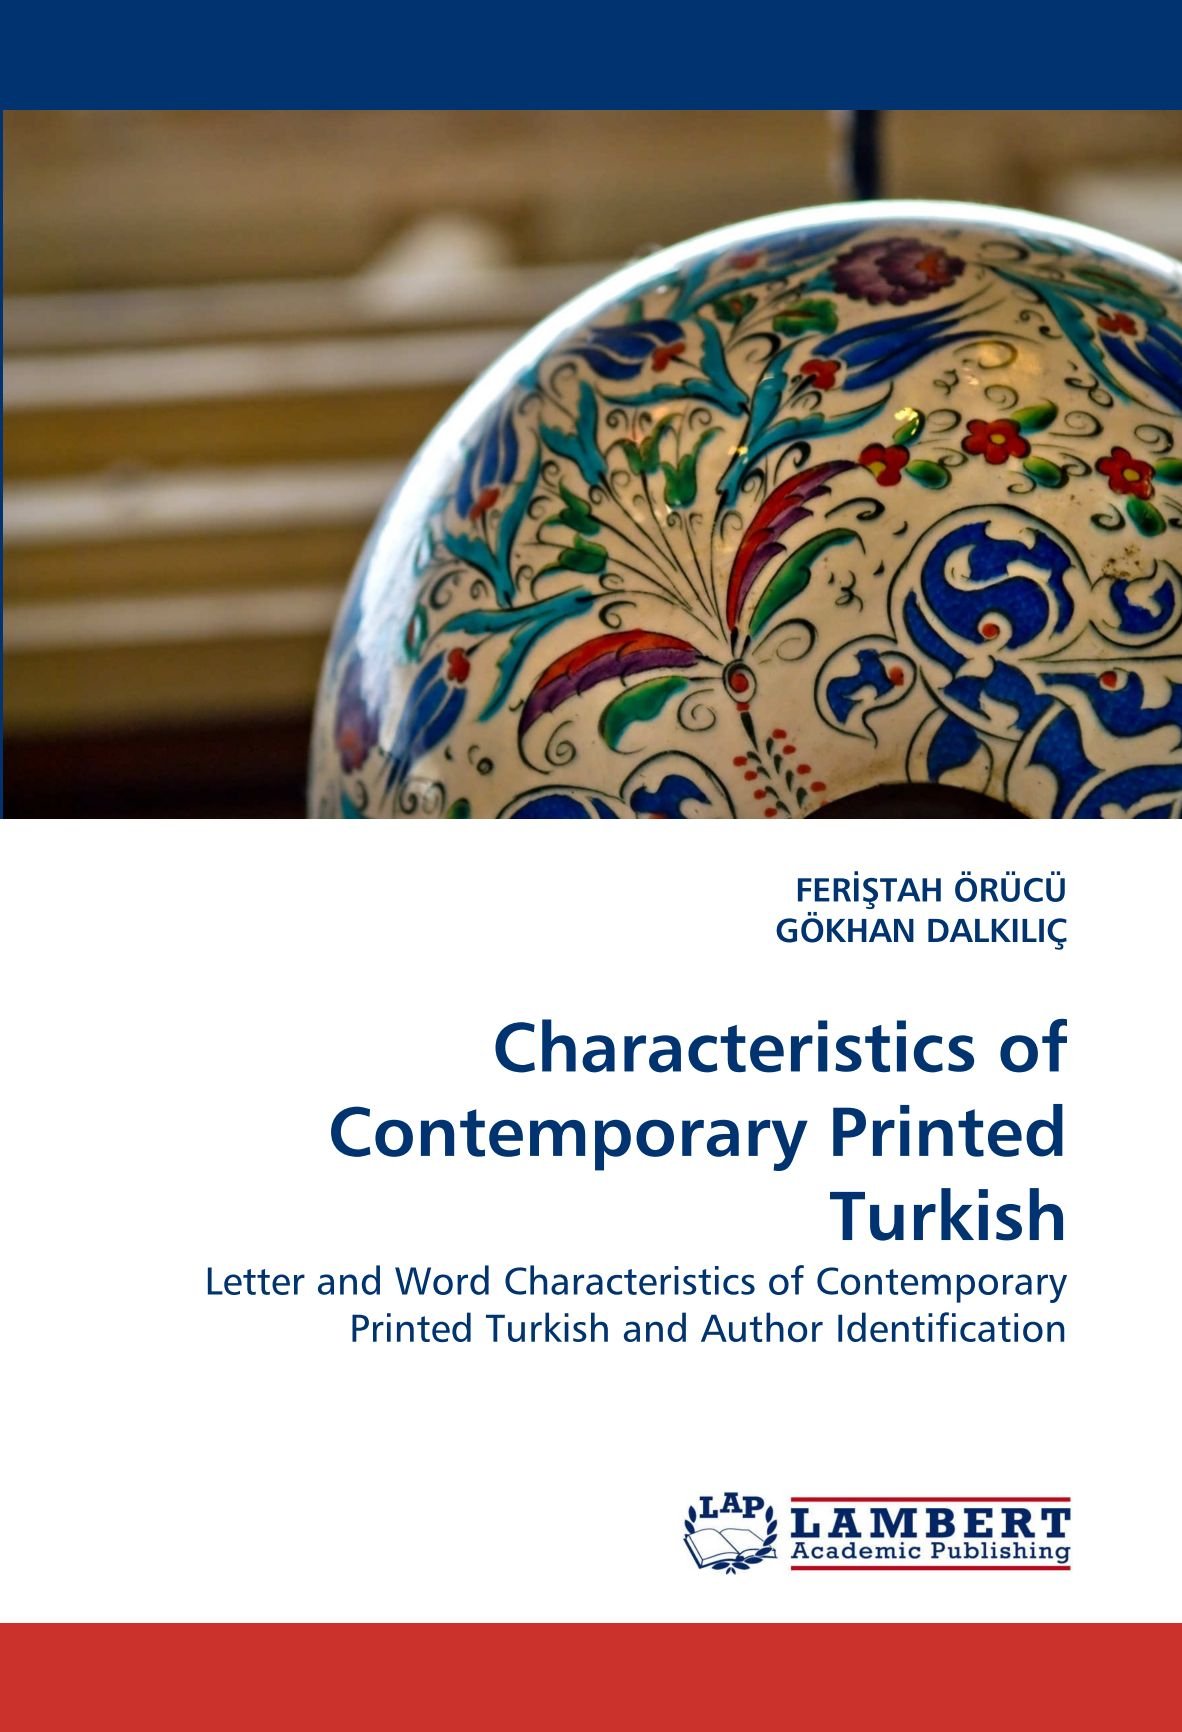 Characteristics-of-Contemporary-Printed-Turkish.jpg